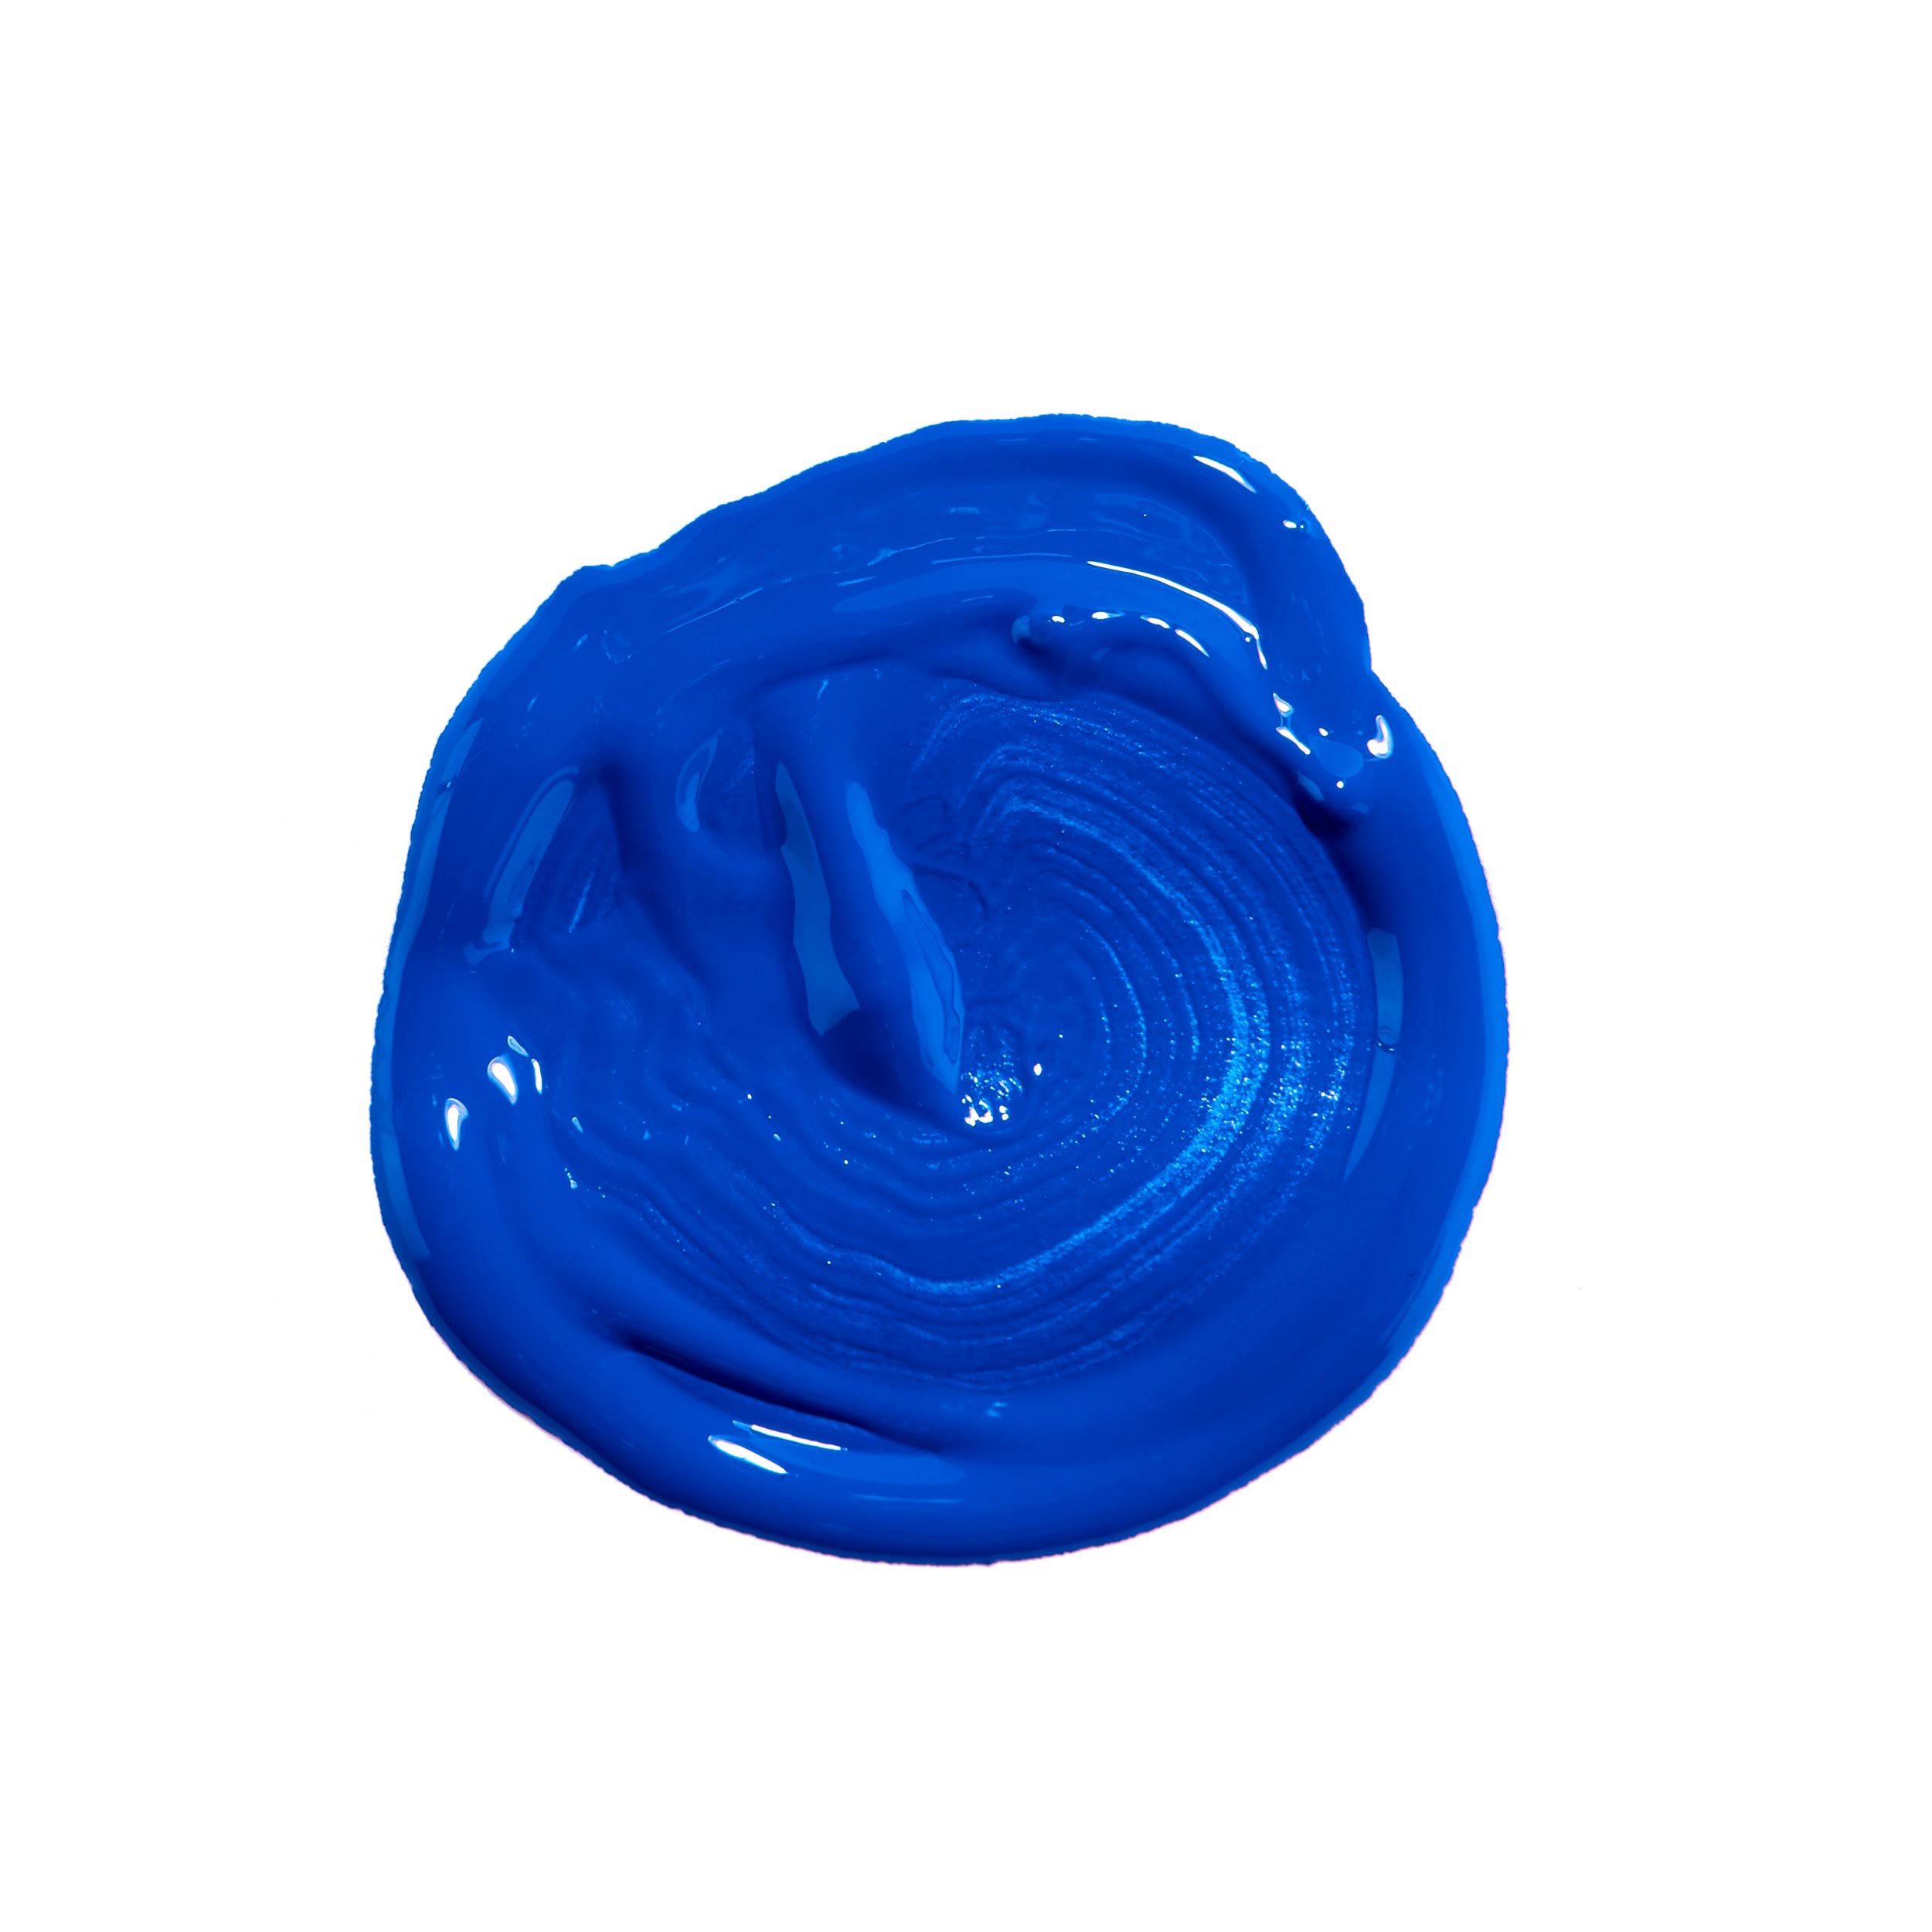 Buy #127 Cerulean Blue Hue - Lightfastness:, - Opaque Online